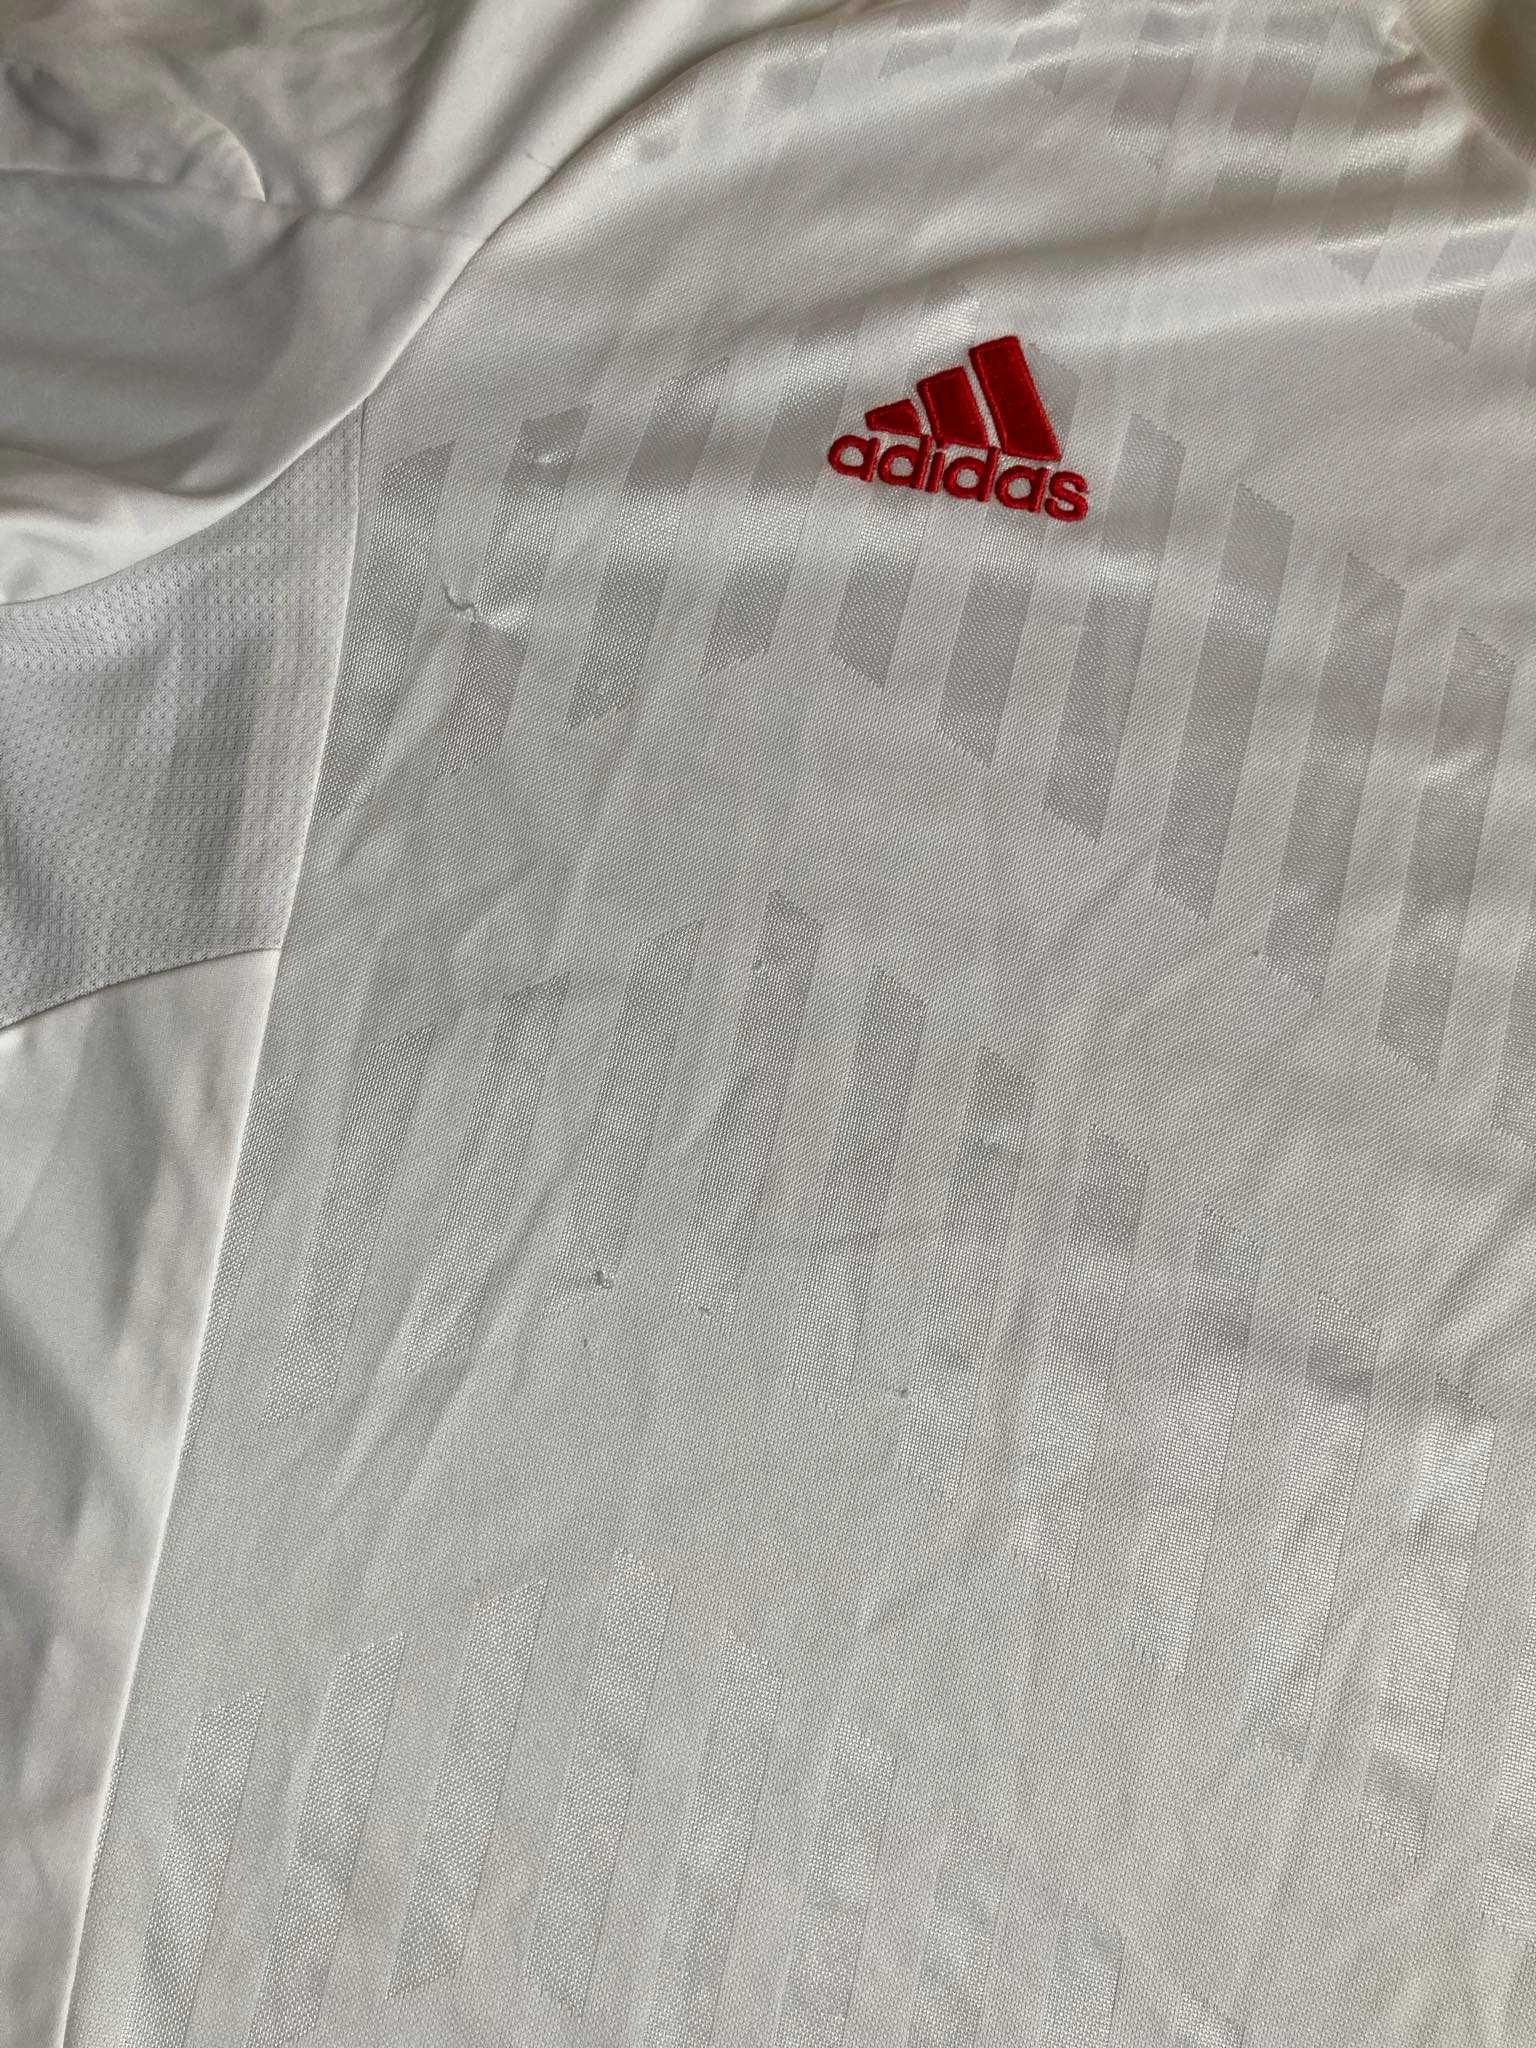 Koszulka Piłkarska Dania 2012 Adidas roz. L